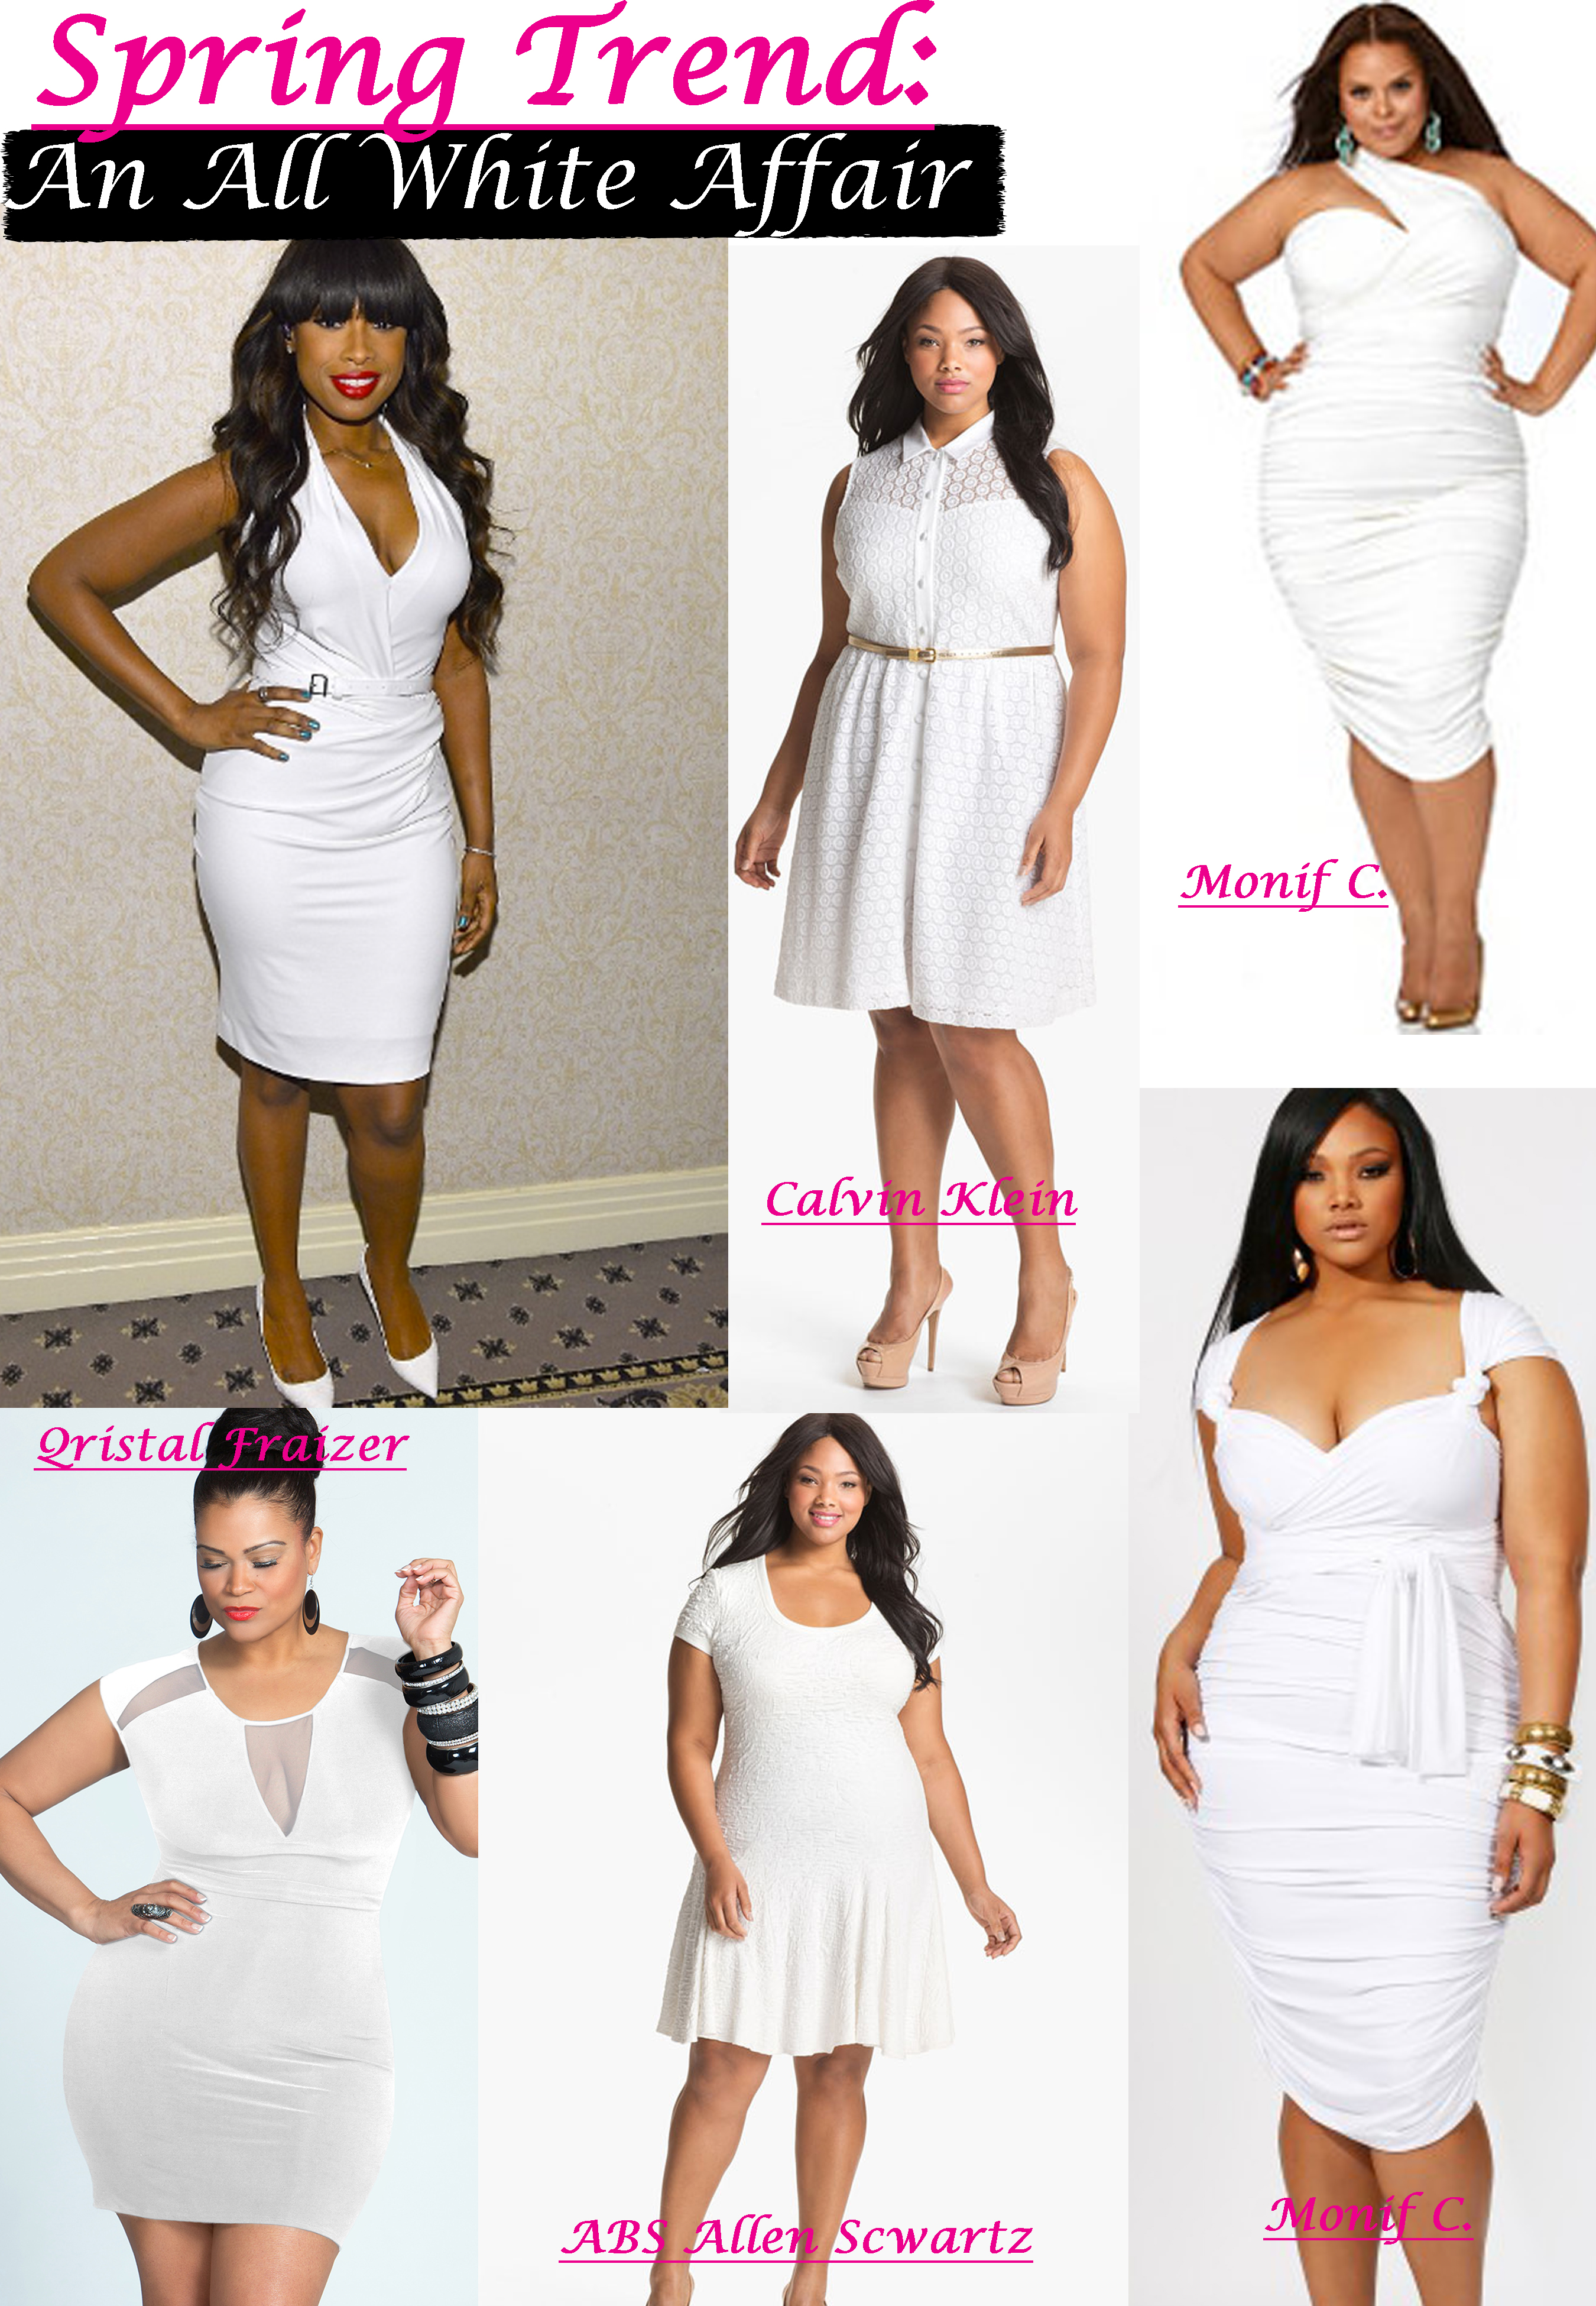 plus size white dresses for women